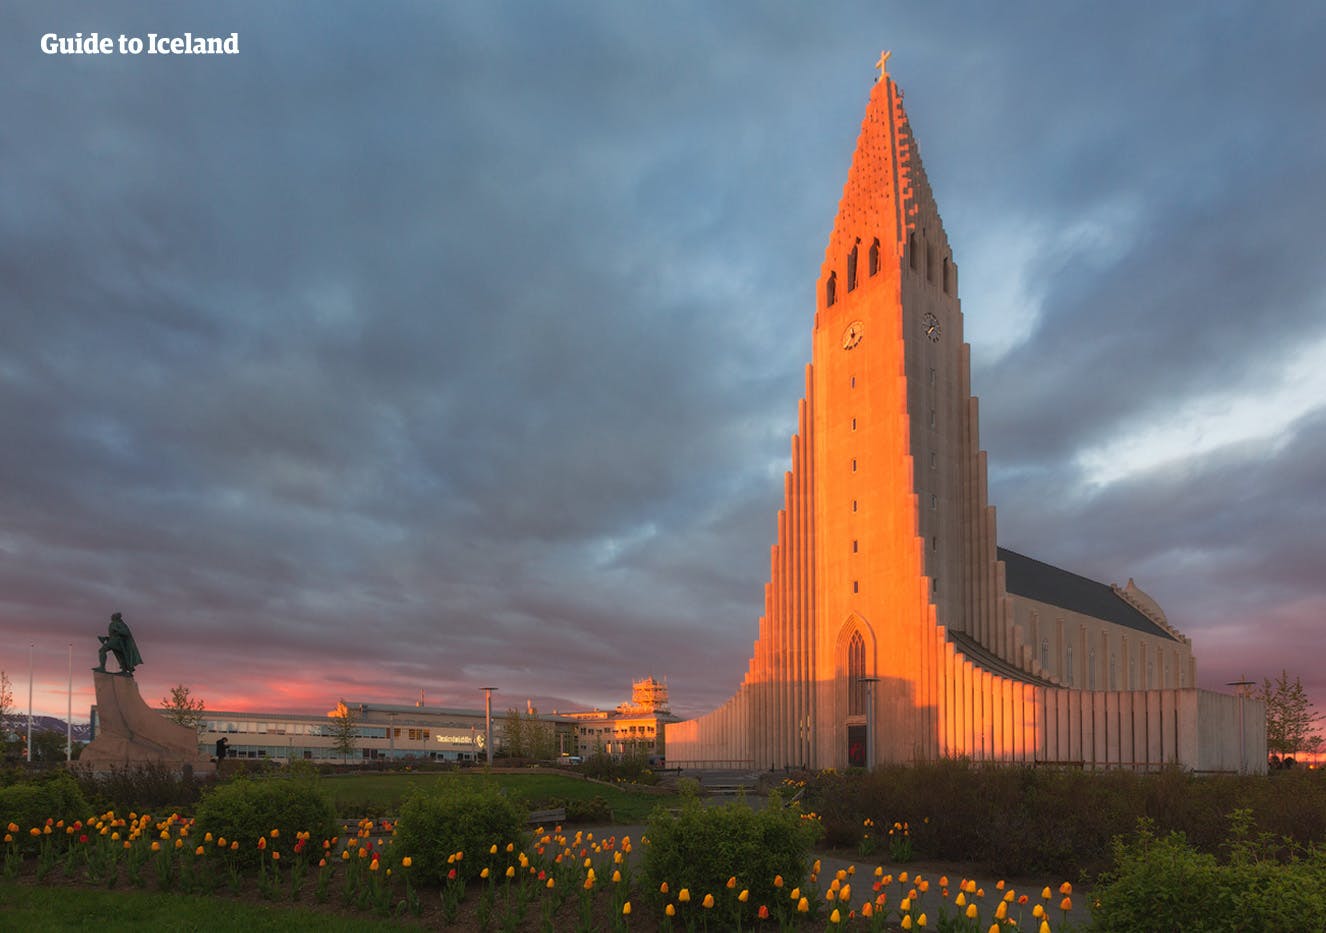 Le bâtiment emblématique de Reykjavík, l'église Hallgrímskirkja, illuminée par les rayons du soleil de minuit en Islande.